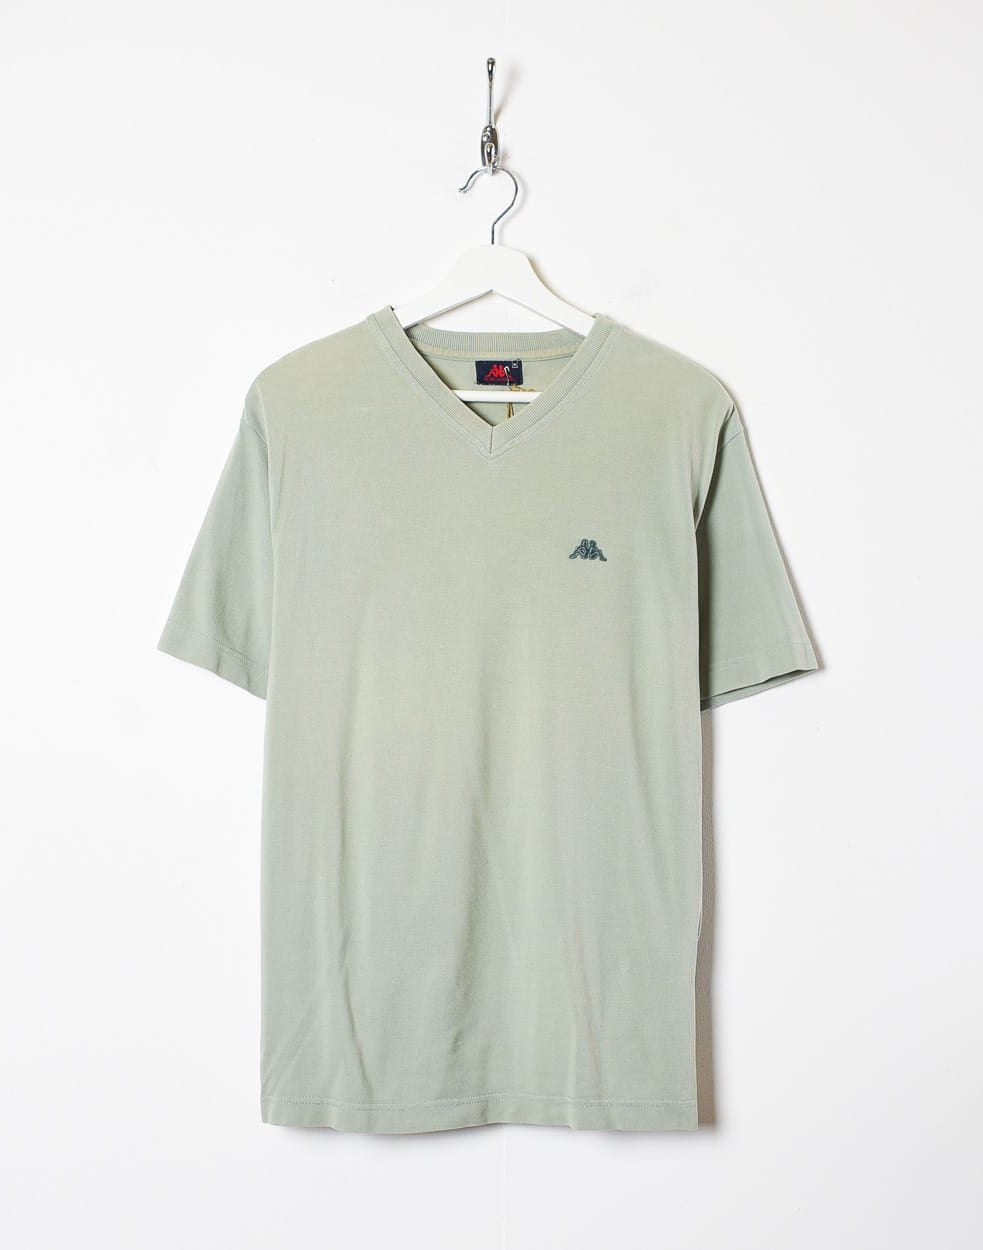 Green Kappa T-Shirt - Medium